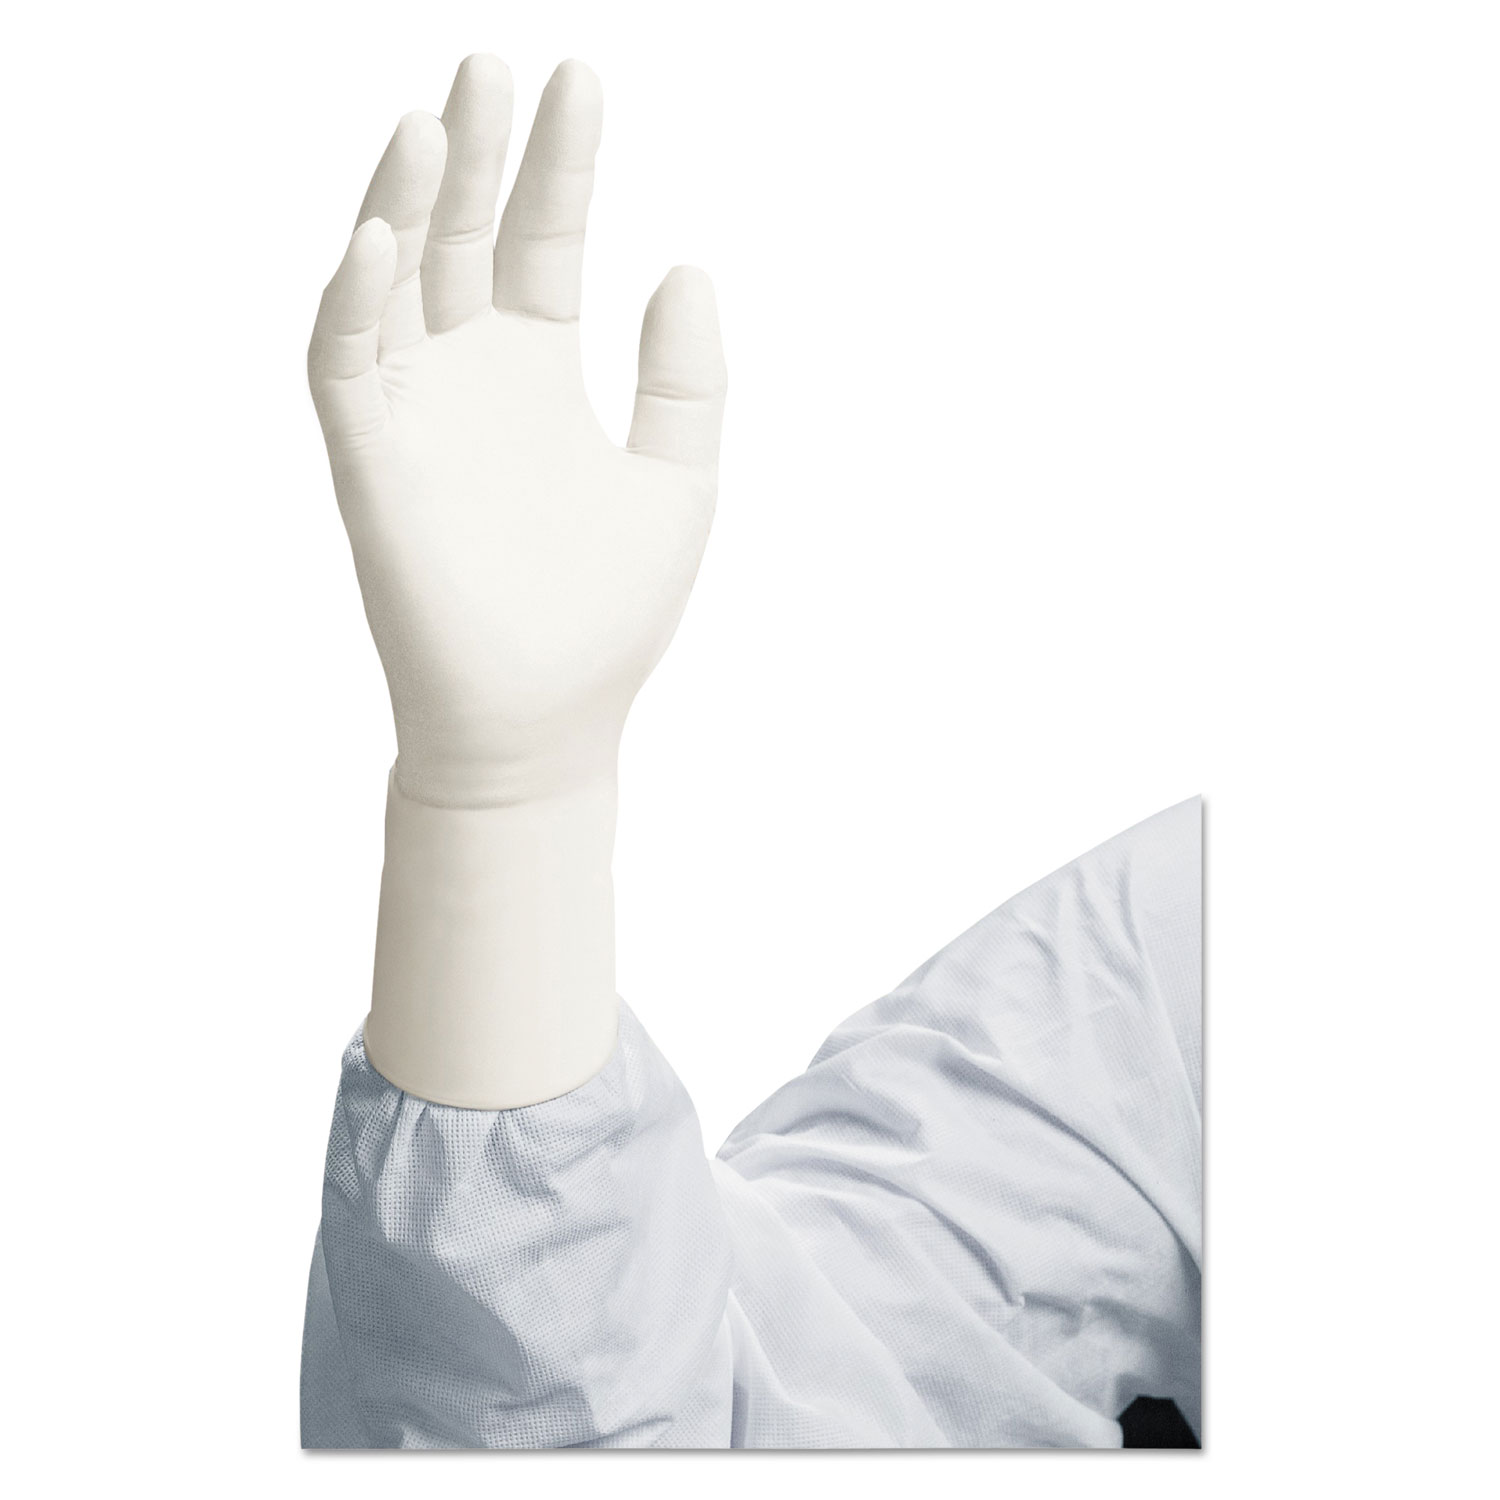  Kimtech KCC 62993 G3 NXT Nitrile Gloves, Powder-Free, 305mm Length, Large, White, 100/Bag 10 BG/CT (KCC62993) 